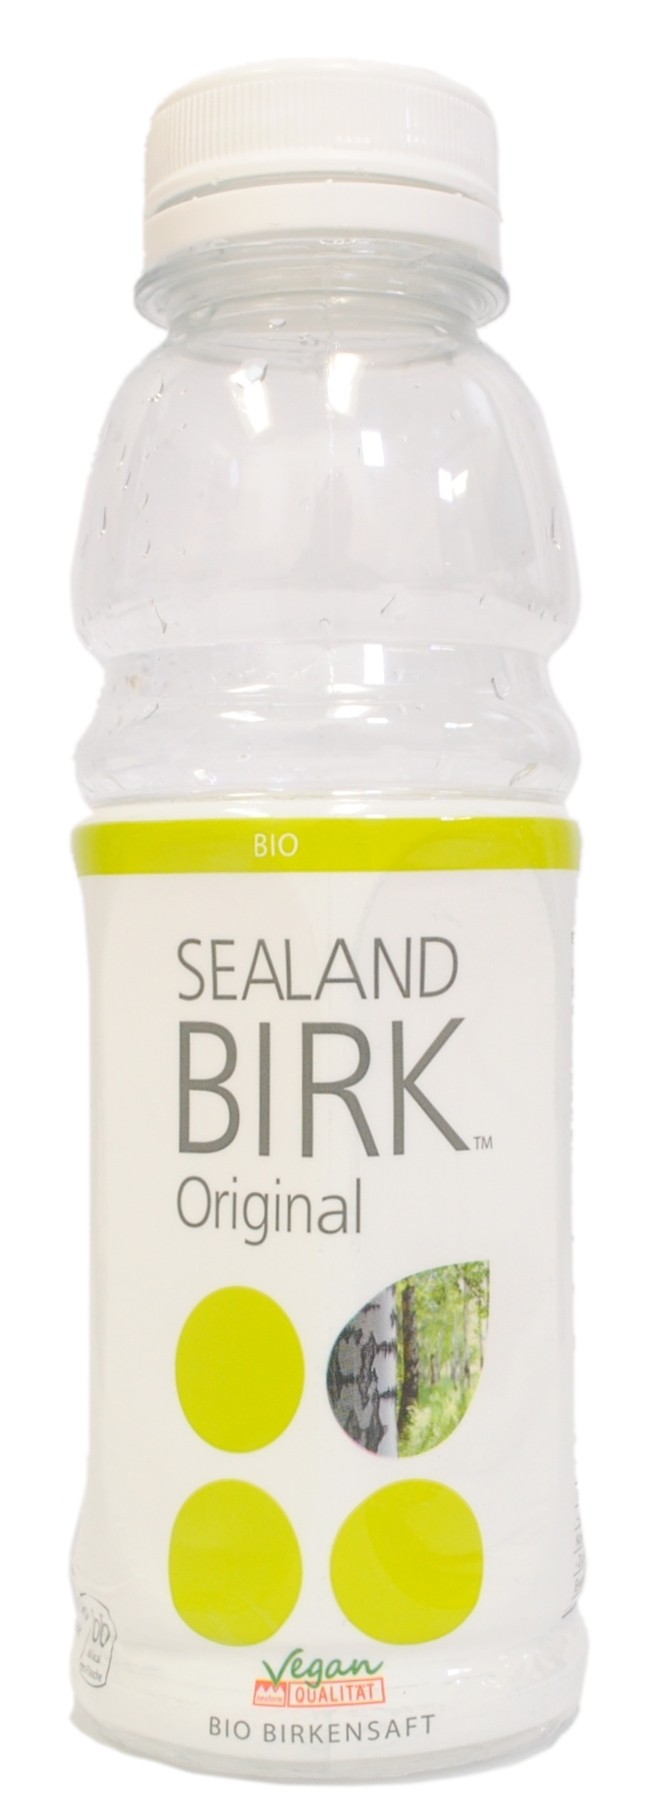 Sealand Birk